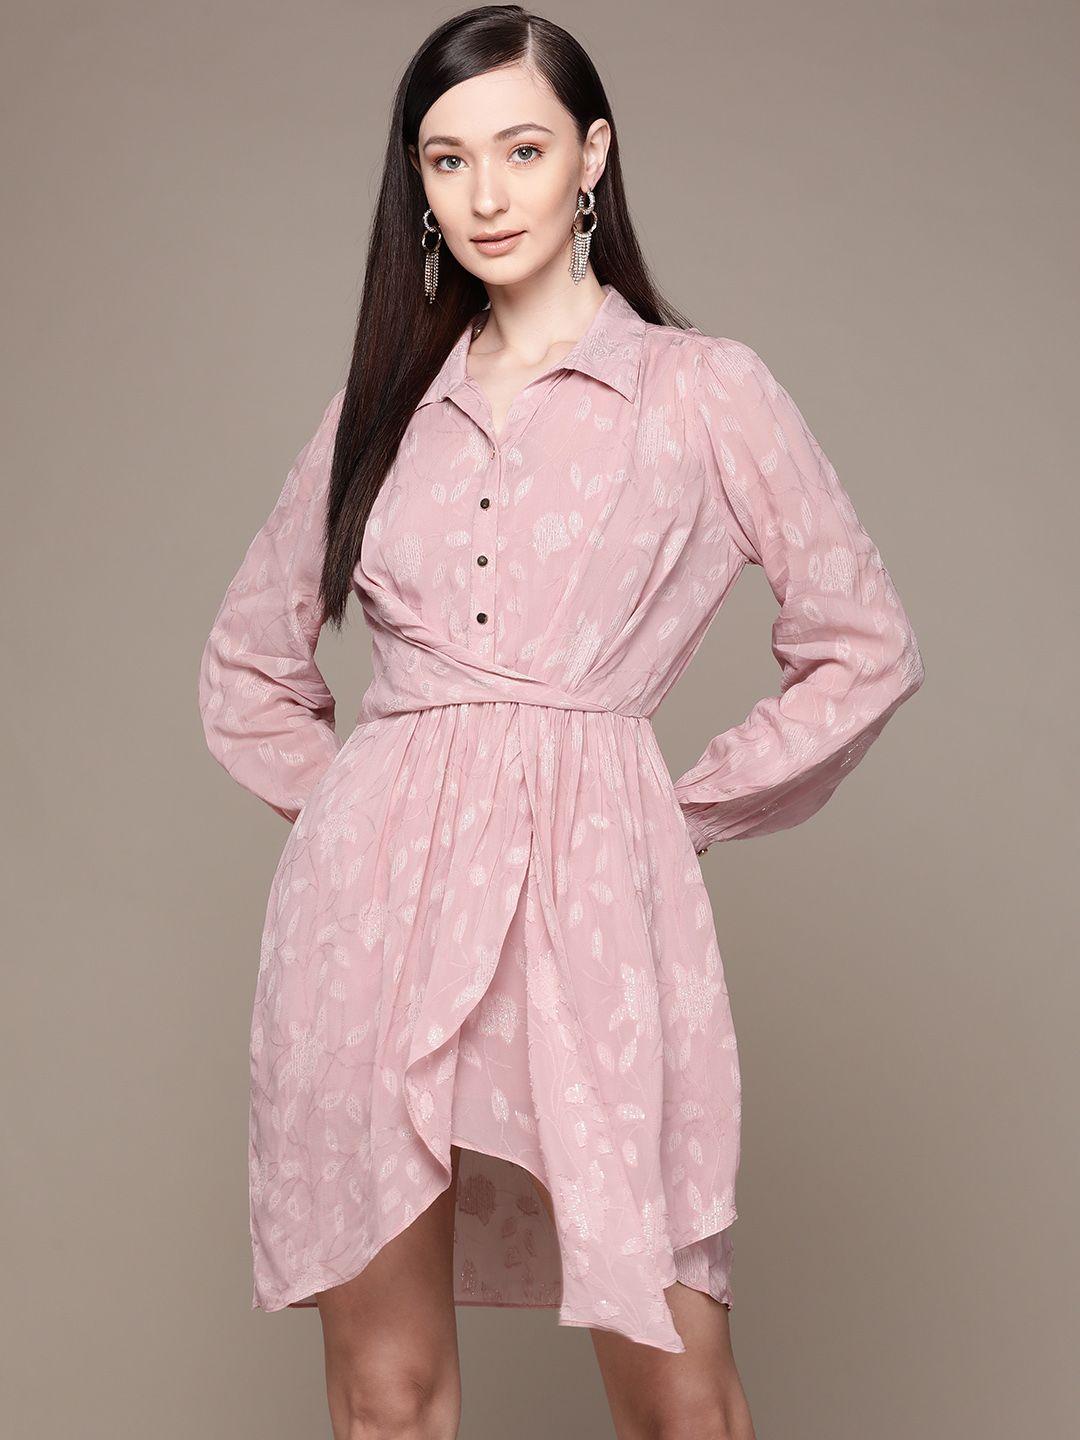 label ritu kumar pink dress with camisole